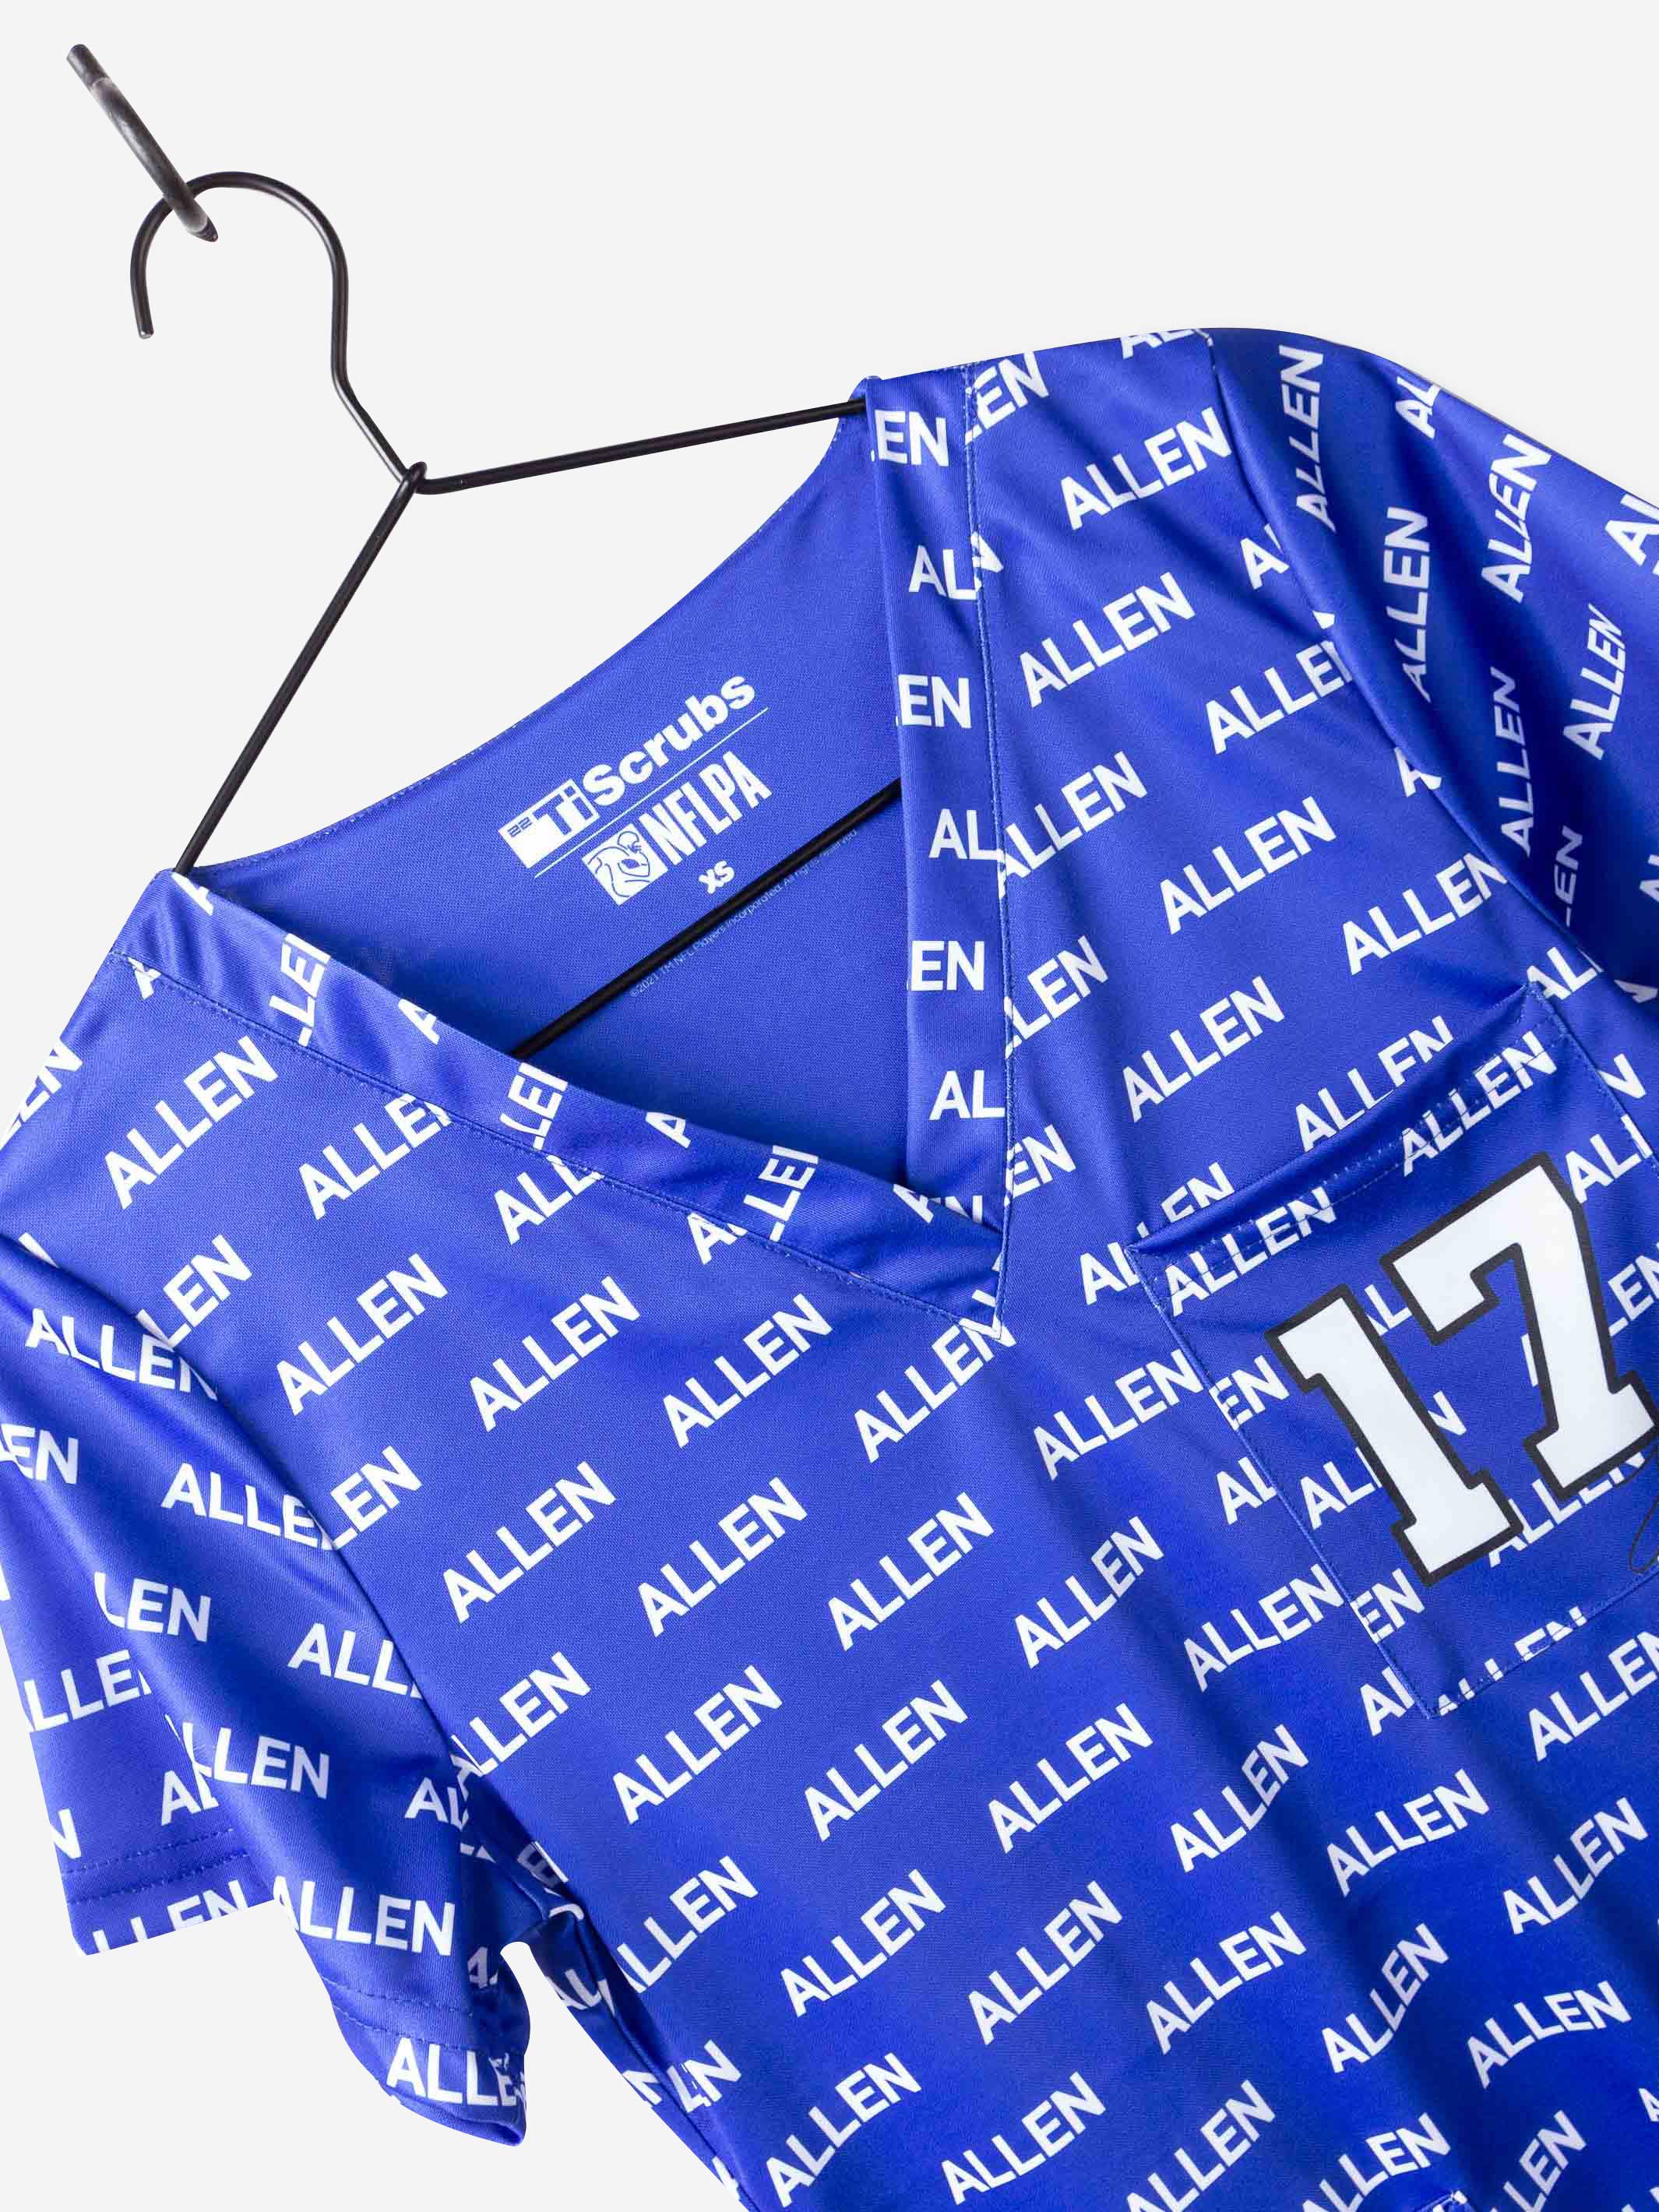 Women&#39;s NFL Josh Allen Scrub Top in Royal Blue with mesh fabric